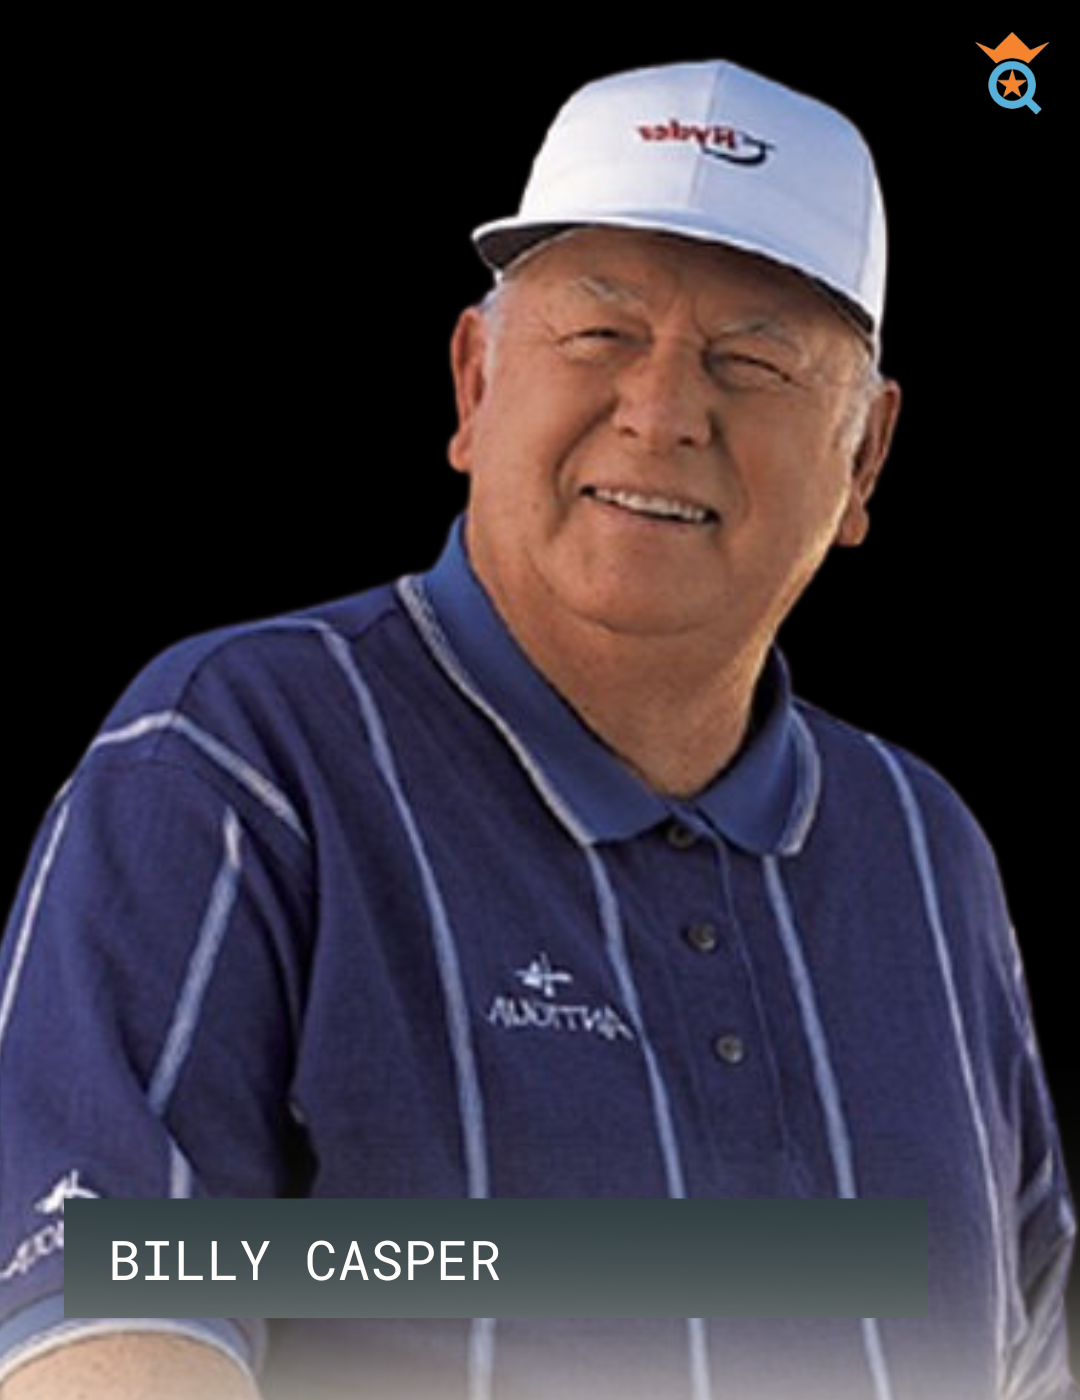 Best Golf Players of All Time, Billy Casper